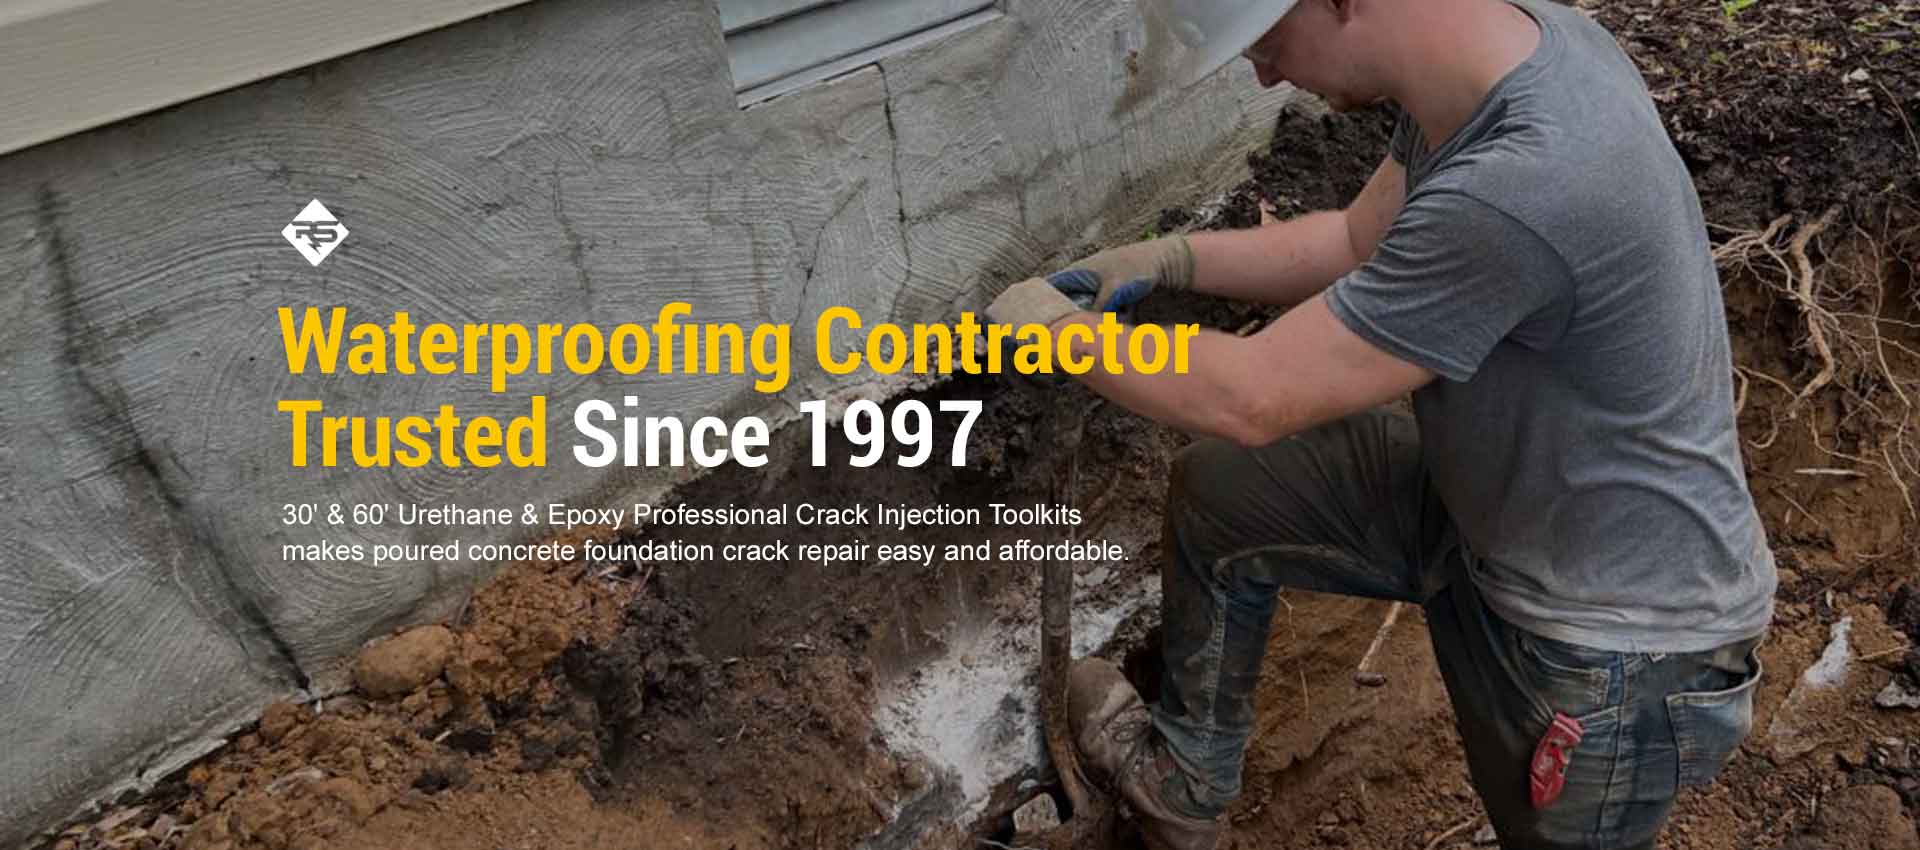 Professional Foundation Concrete Crack Repair Kits